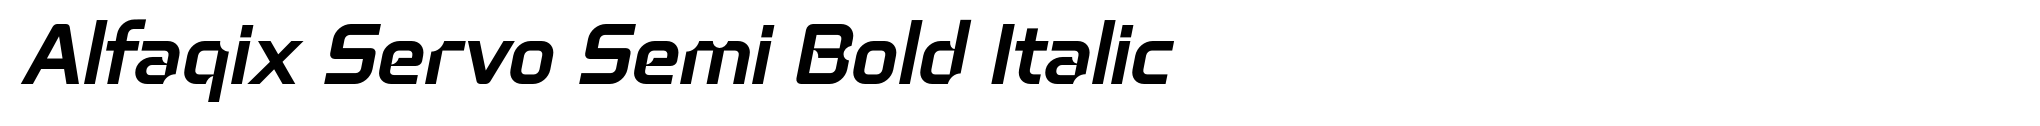 Alfaqix Servo Semi Bold Italic image